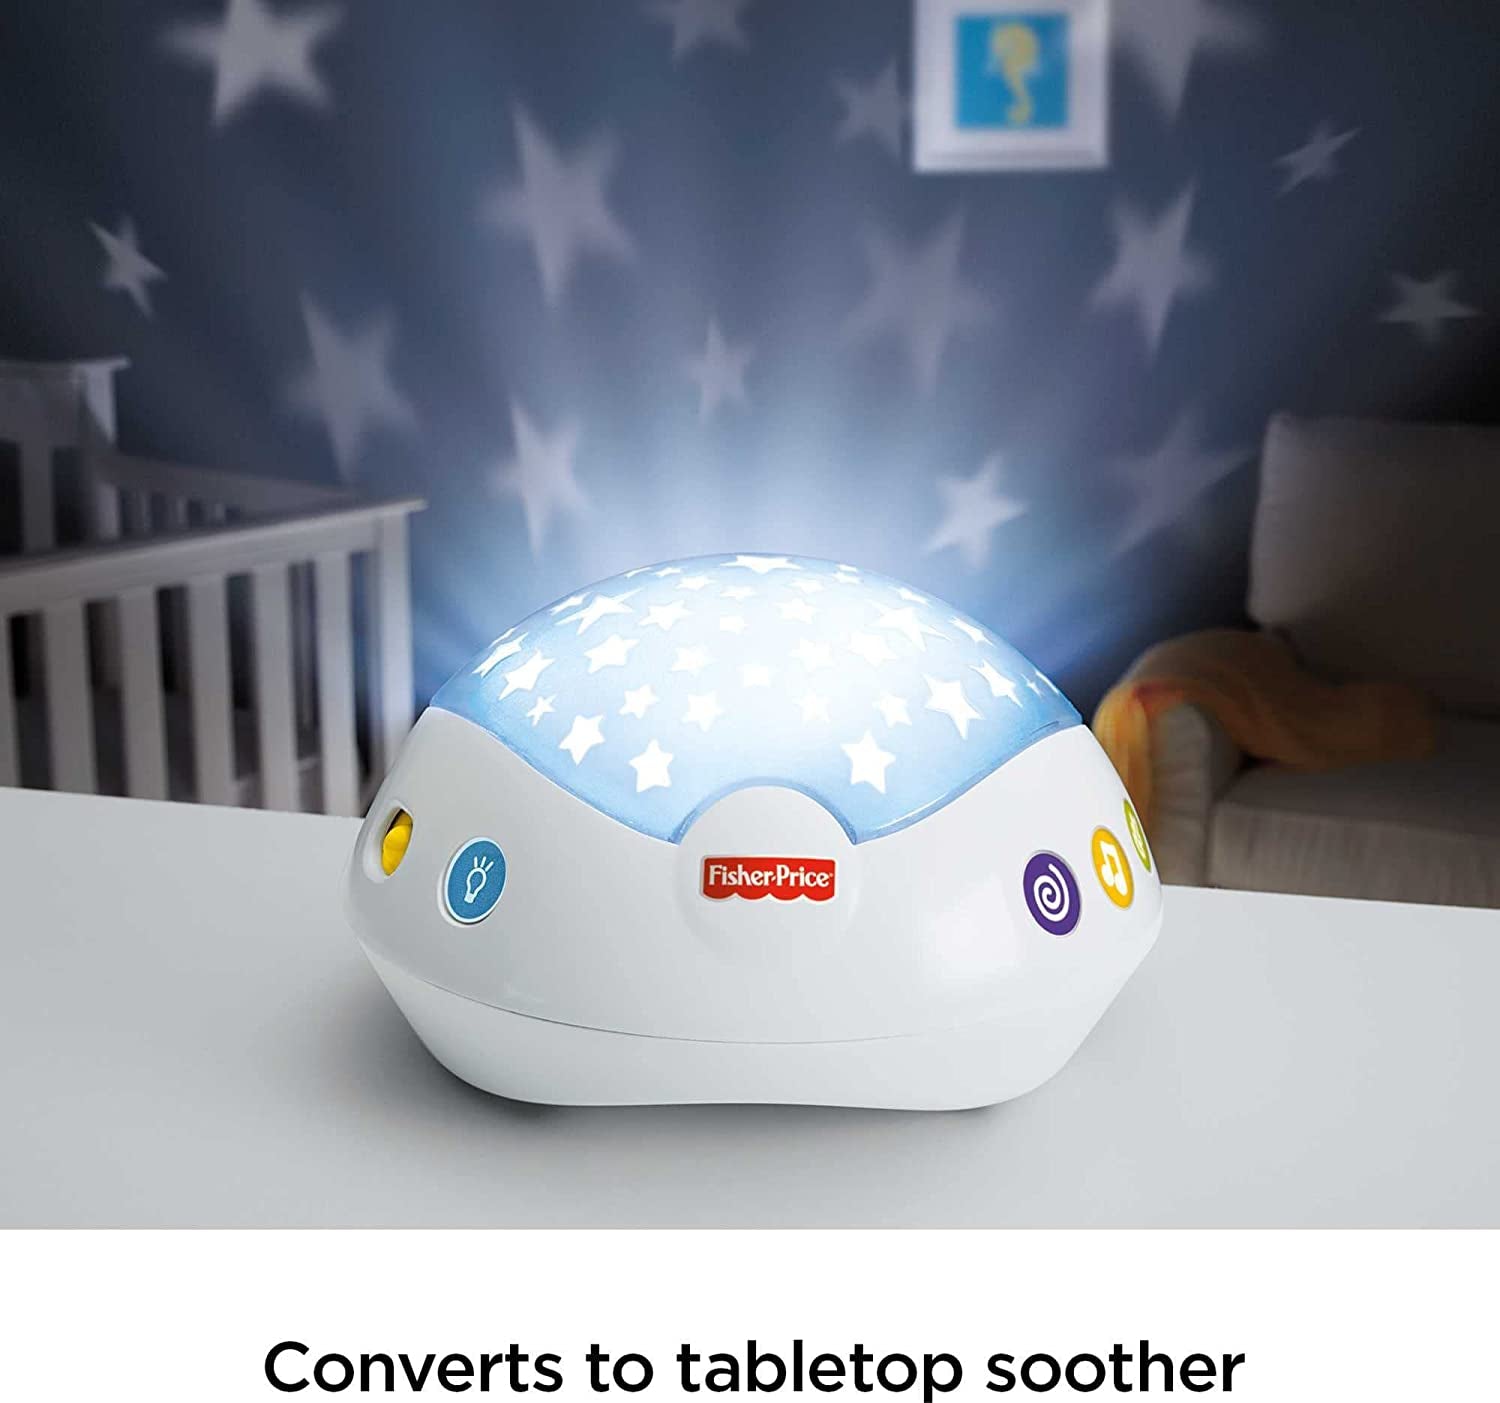 Night Light Kids Star Projector Baby Sensory Lights Toys White Noise M –  ZUGATI